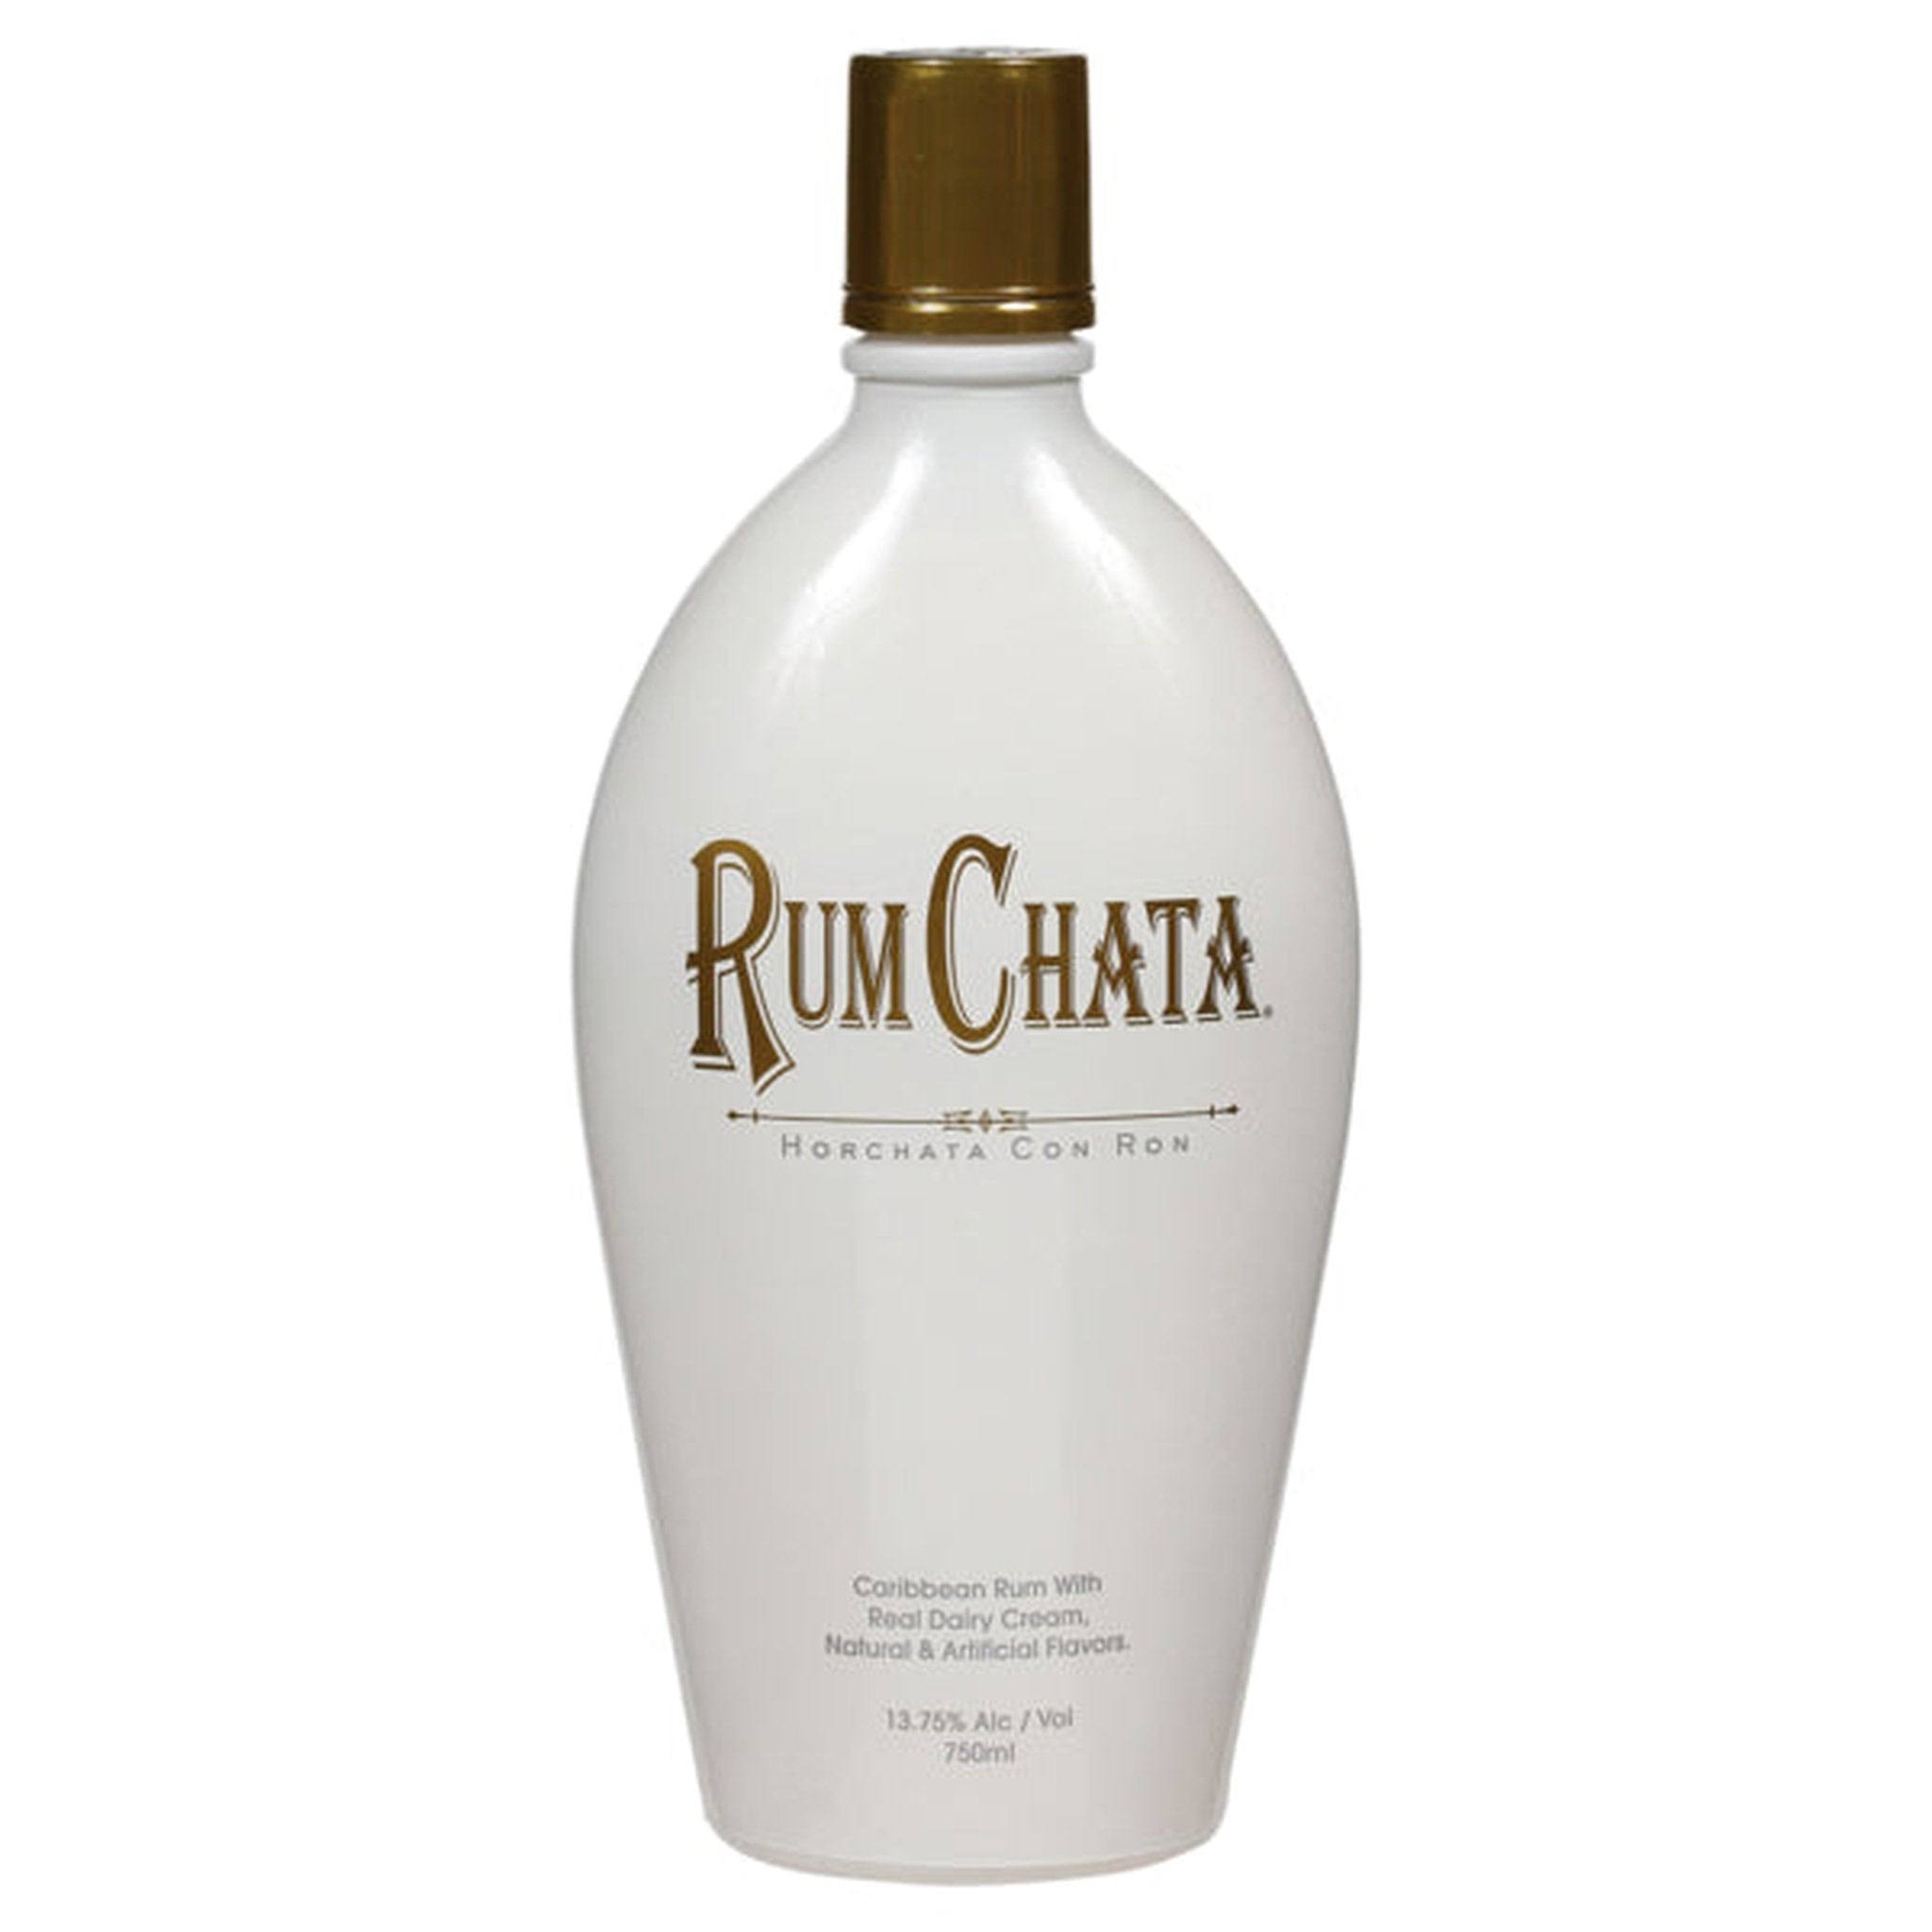 Rumchata Caribbean Rum, with Real Dairy Cream - 750 ml